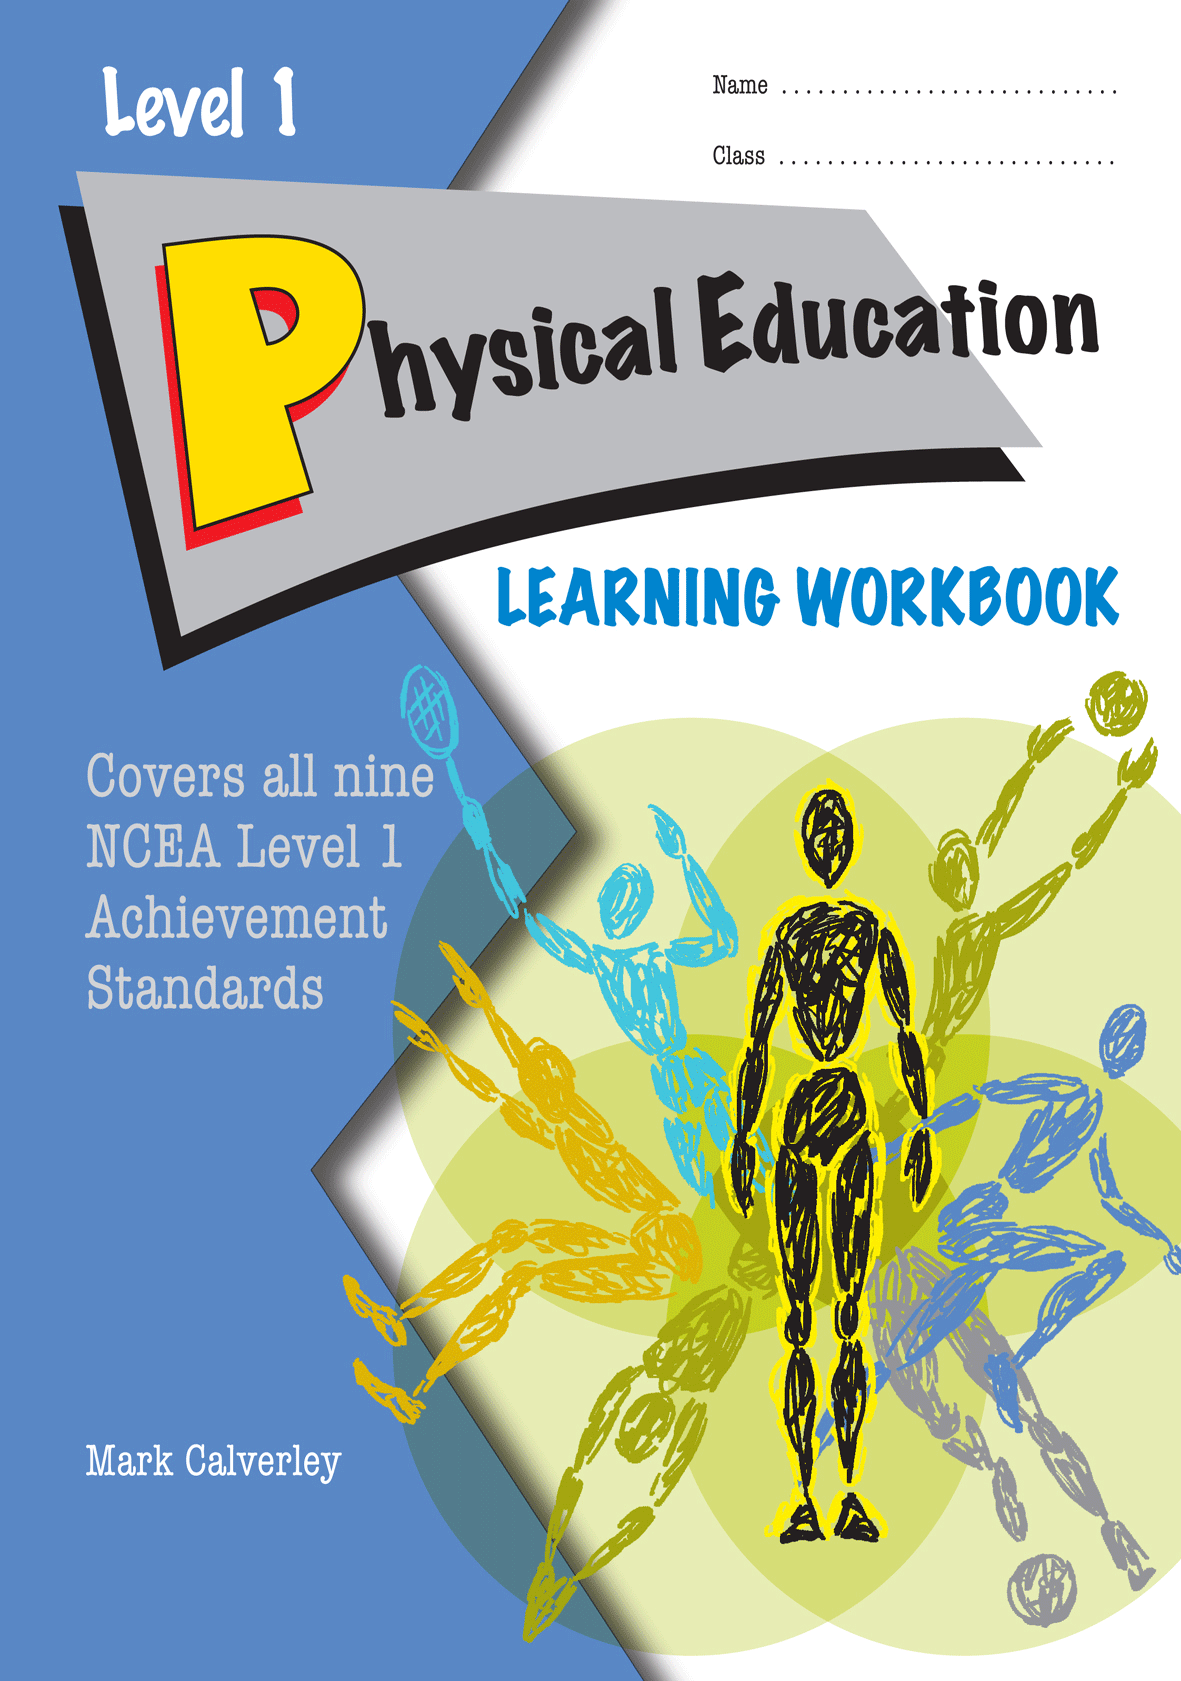 Level 1 Physical Education Learning Workbook